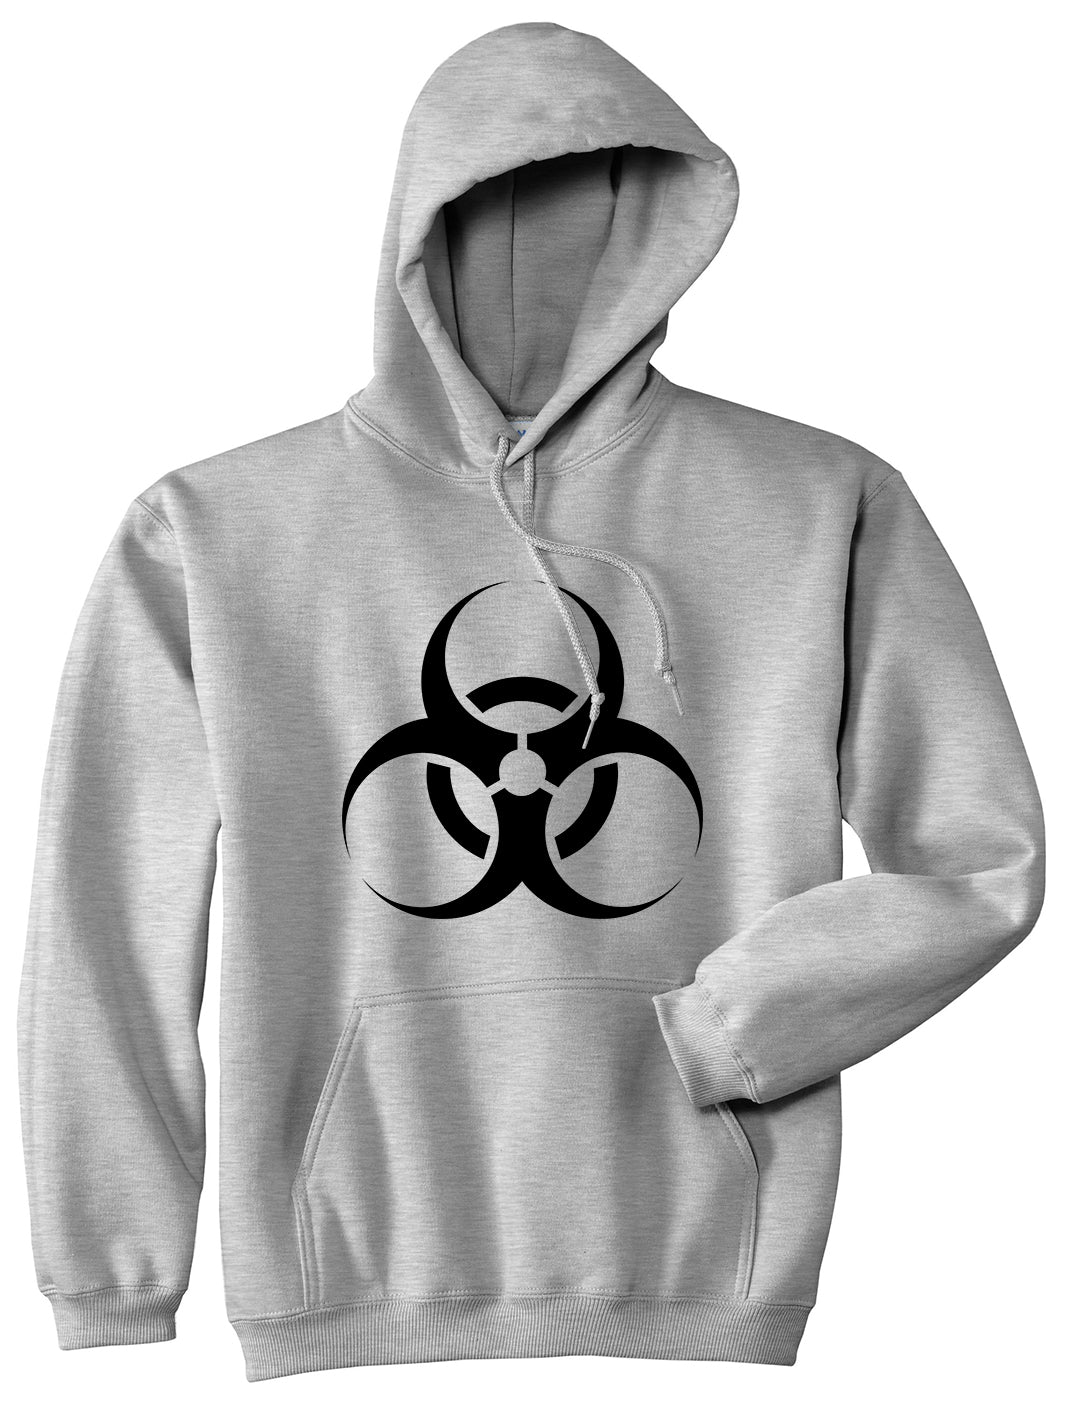 Biohazard Symbol Grey Pullover Hoodie by Kings Of NY